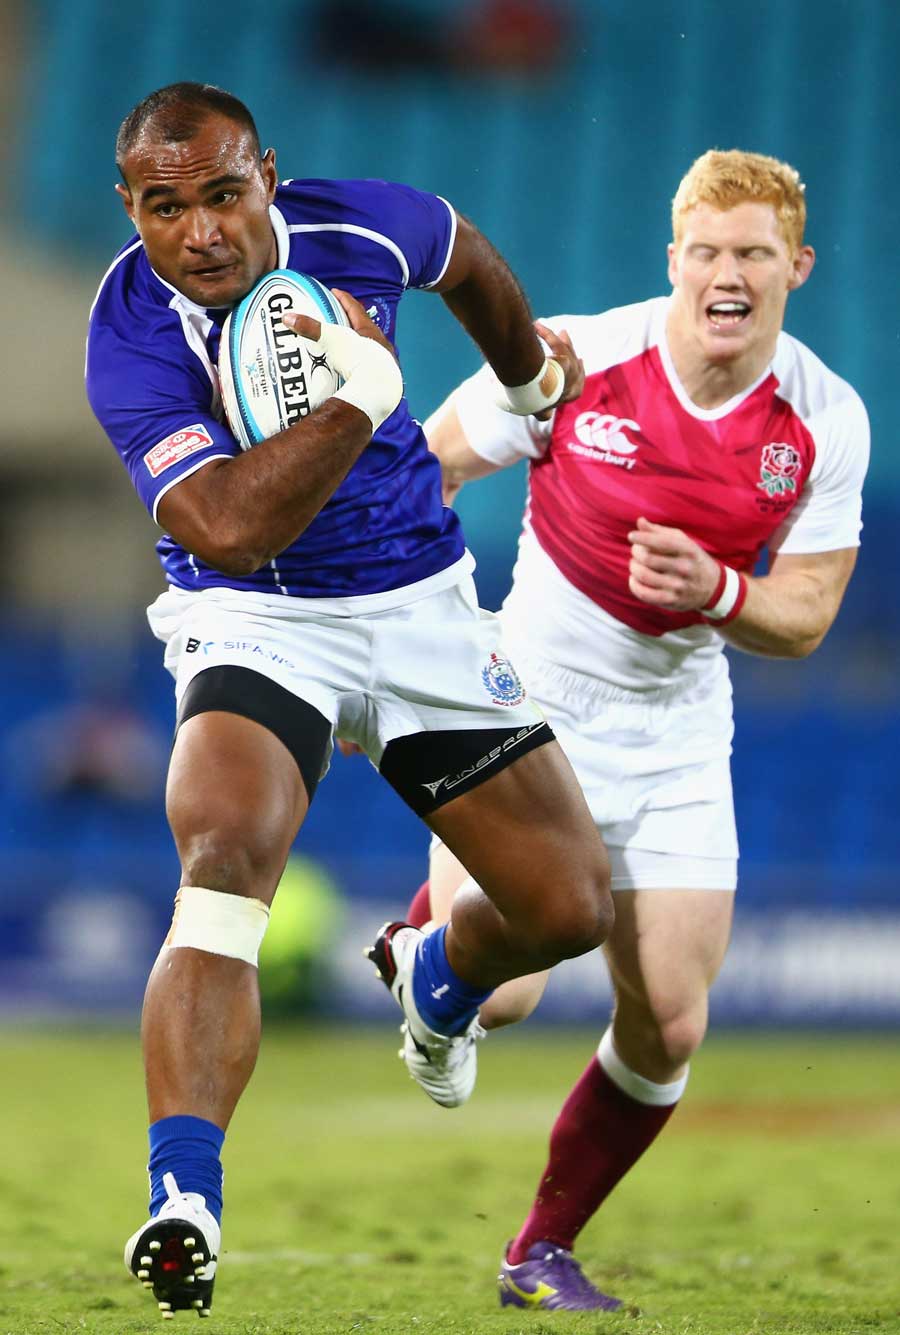 Samoa's Faalemiga Selesele breaks clear of the England defence